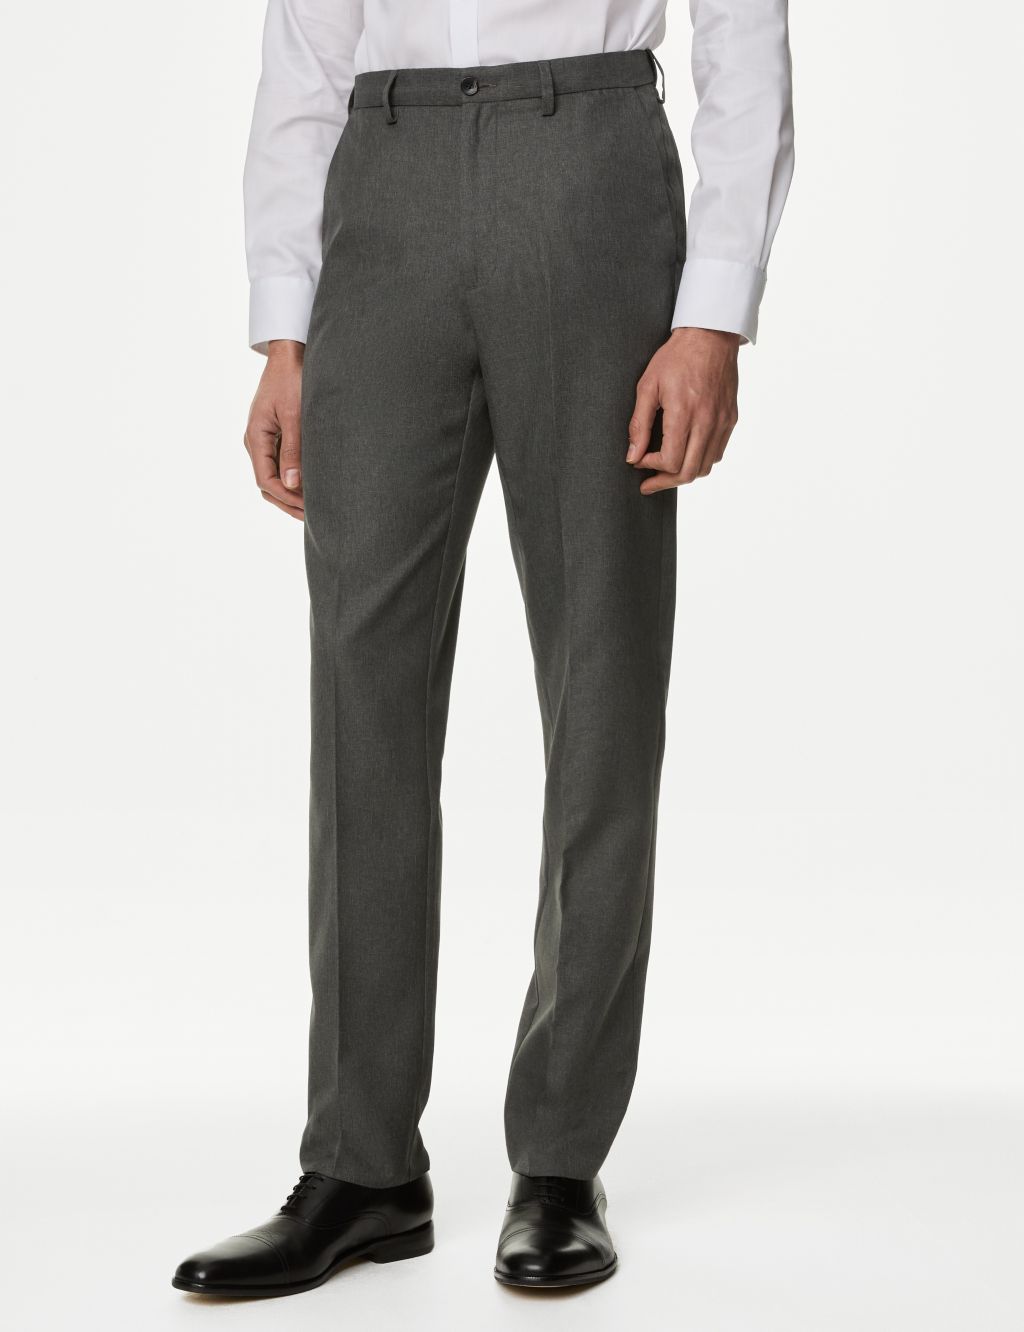 Men’s Smart Grey Trousers | M&S